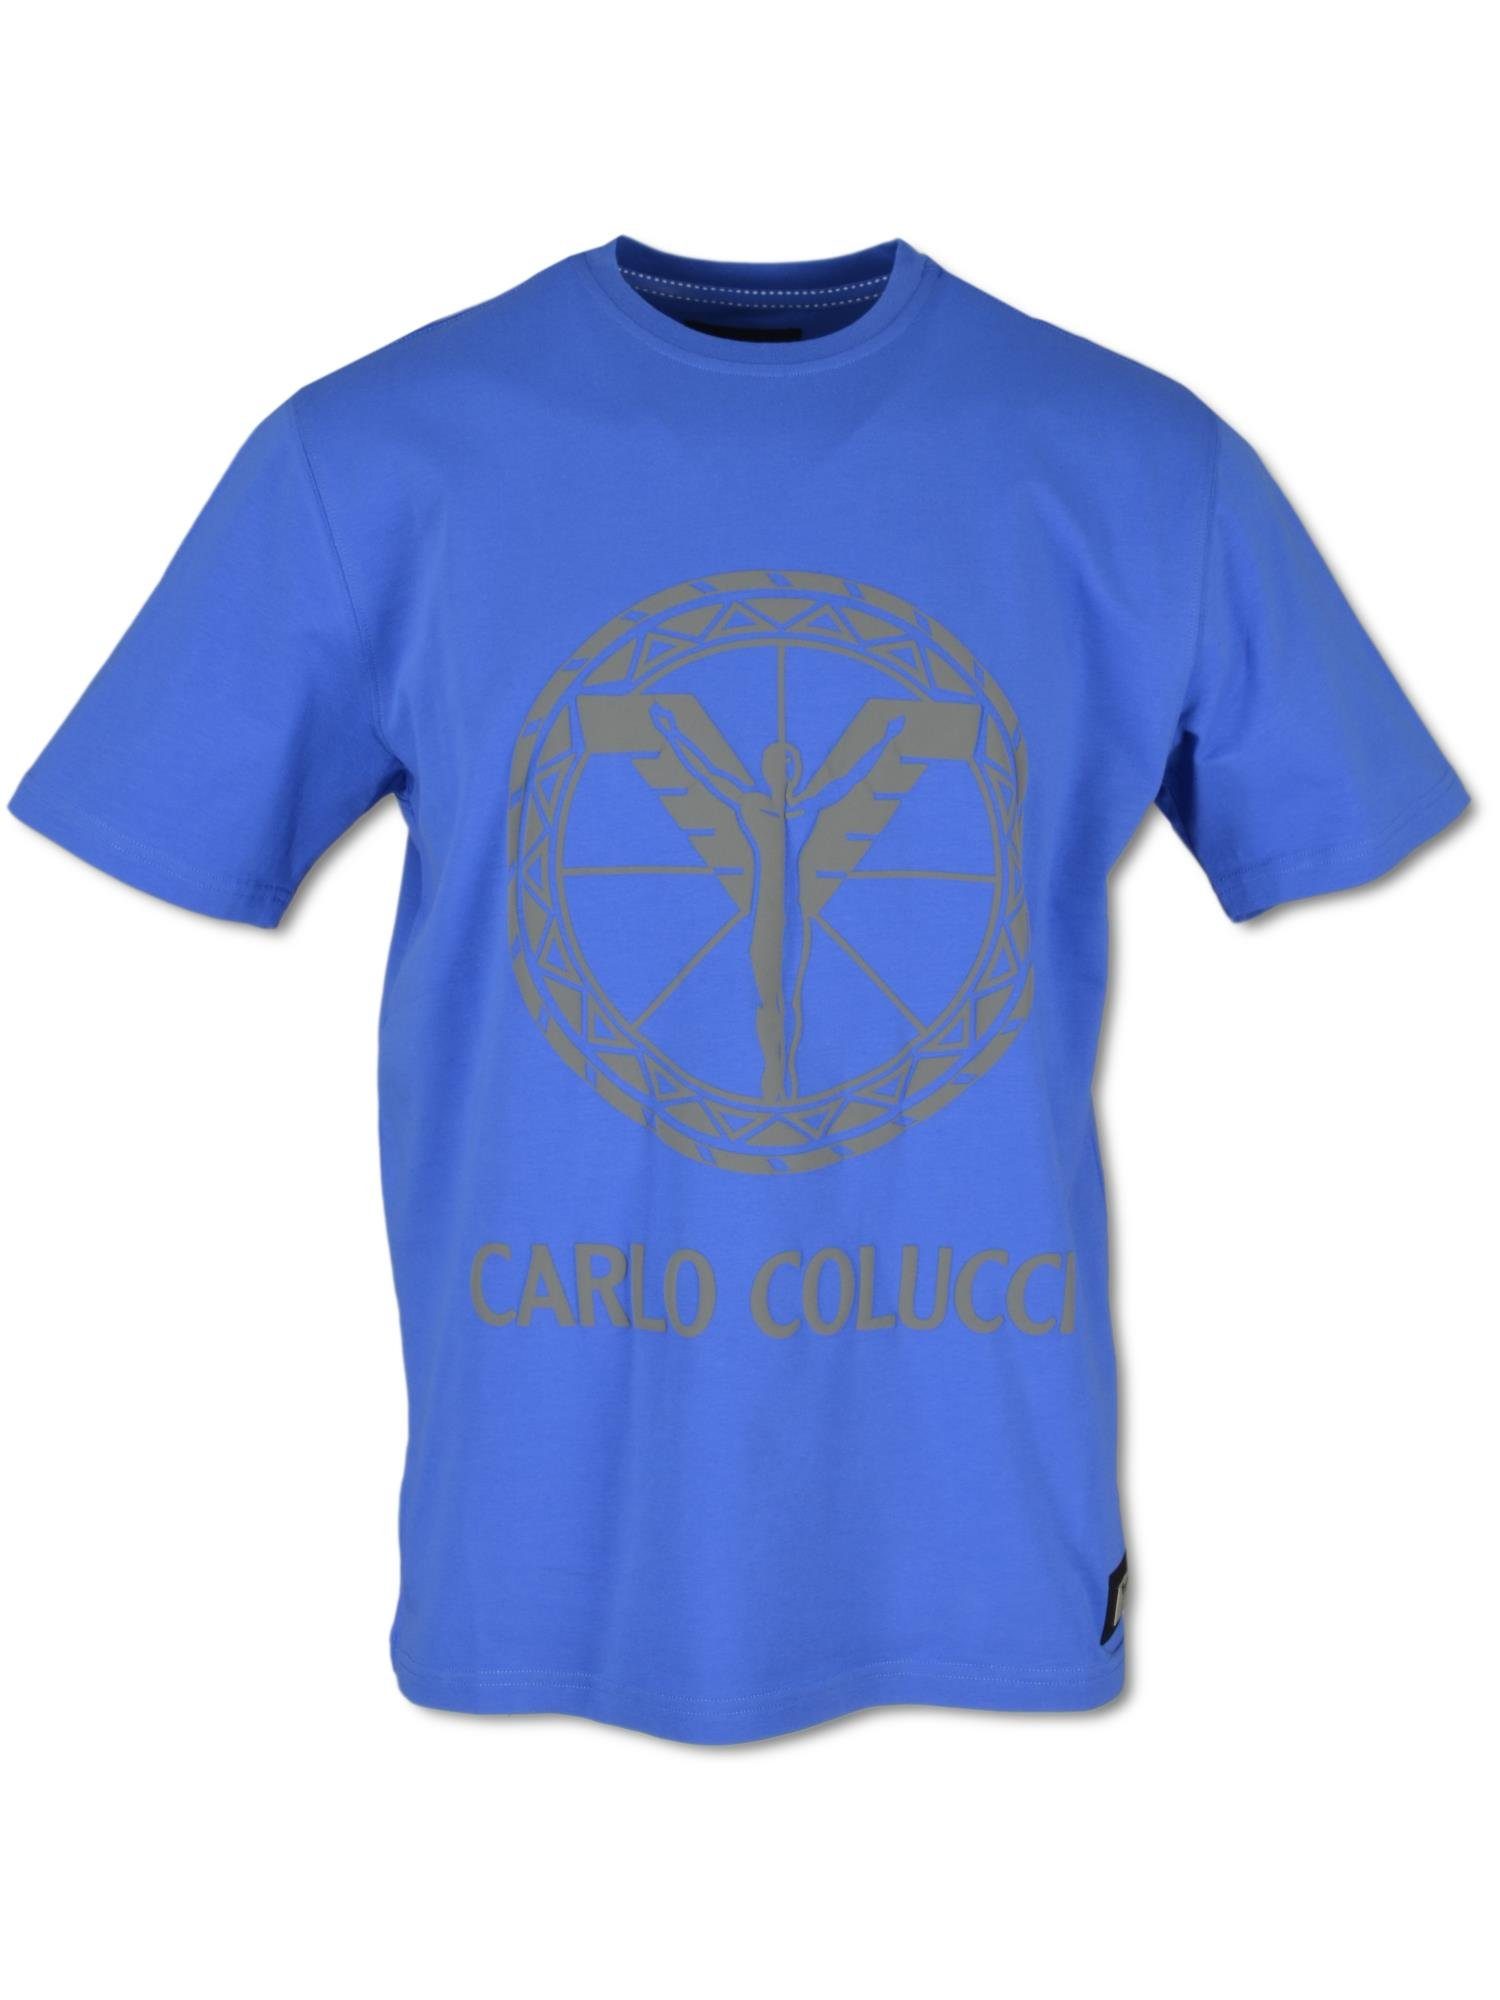 COLUCCI CARLO Cani Azur T-Shirt